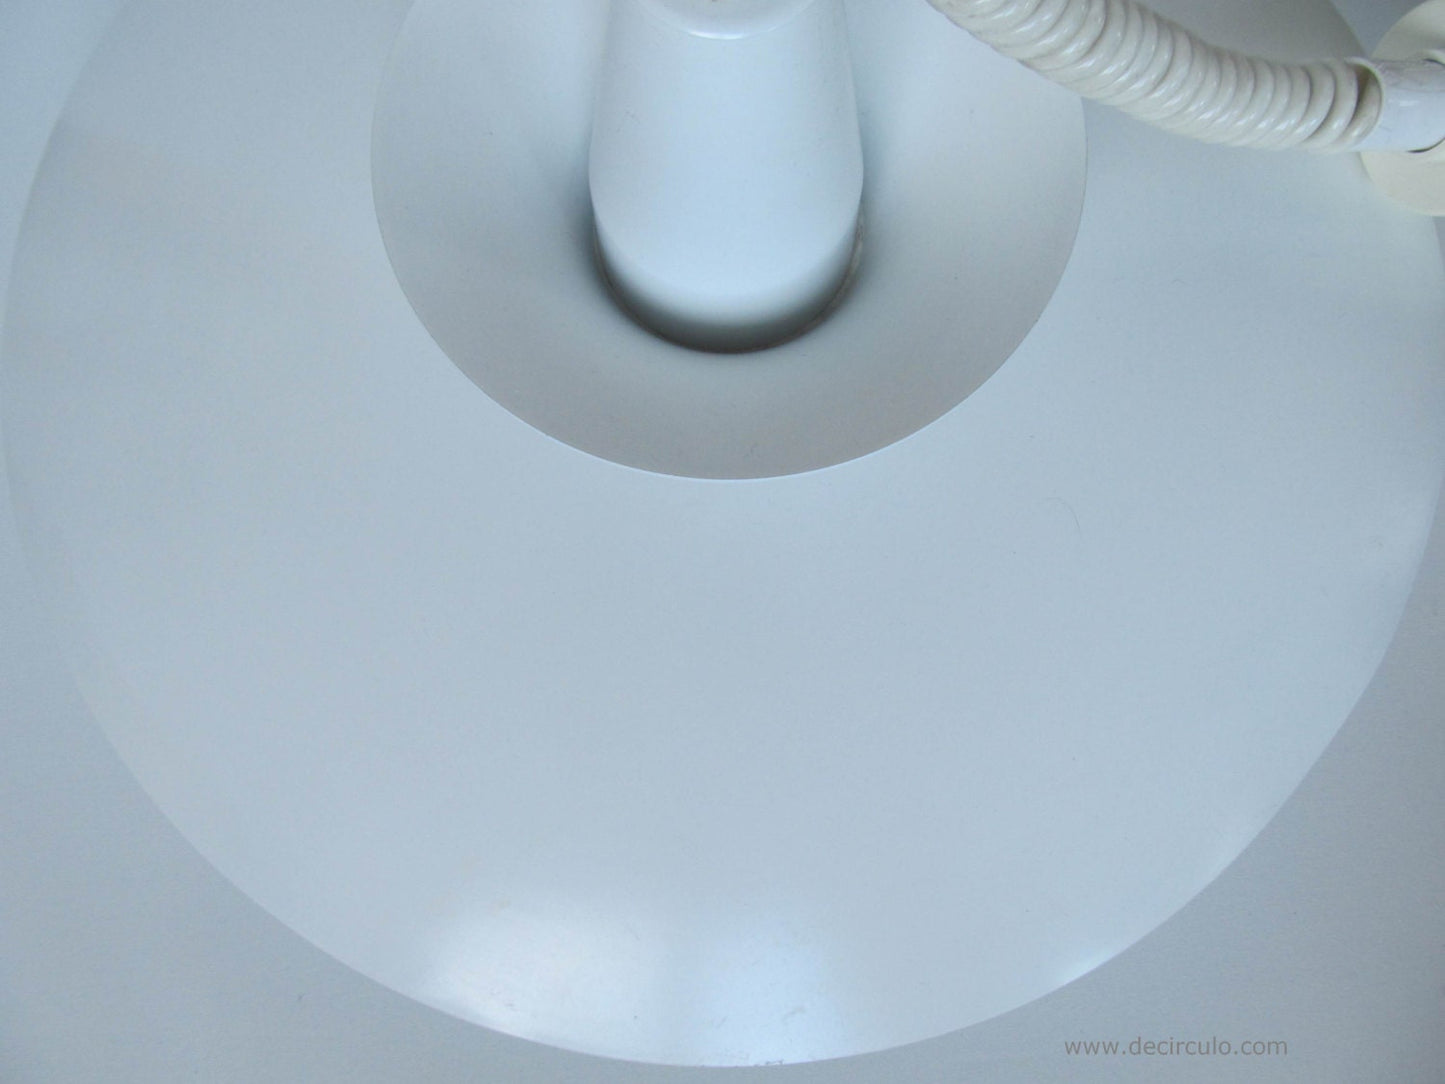 Abo Randers Deense designlamp, groot Scandinavisch wit designlampje